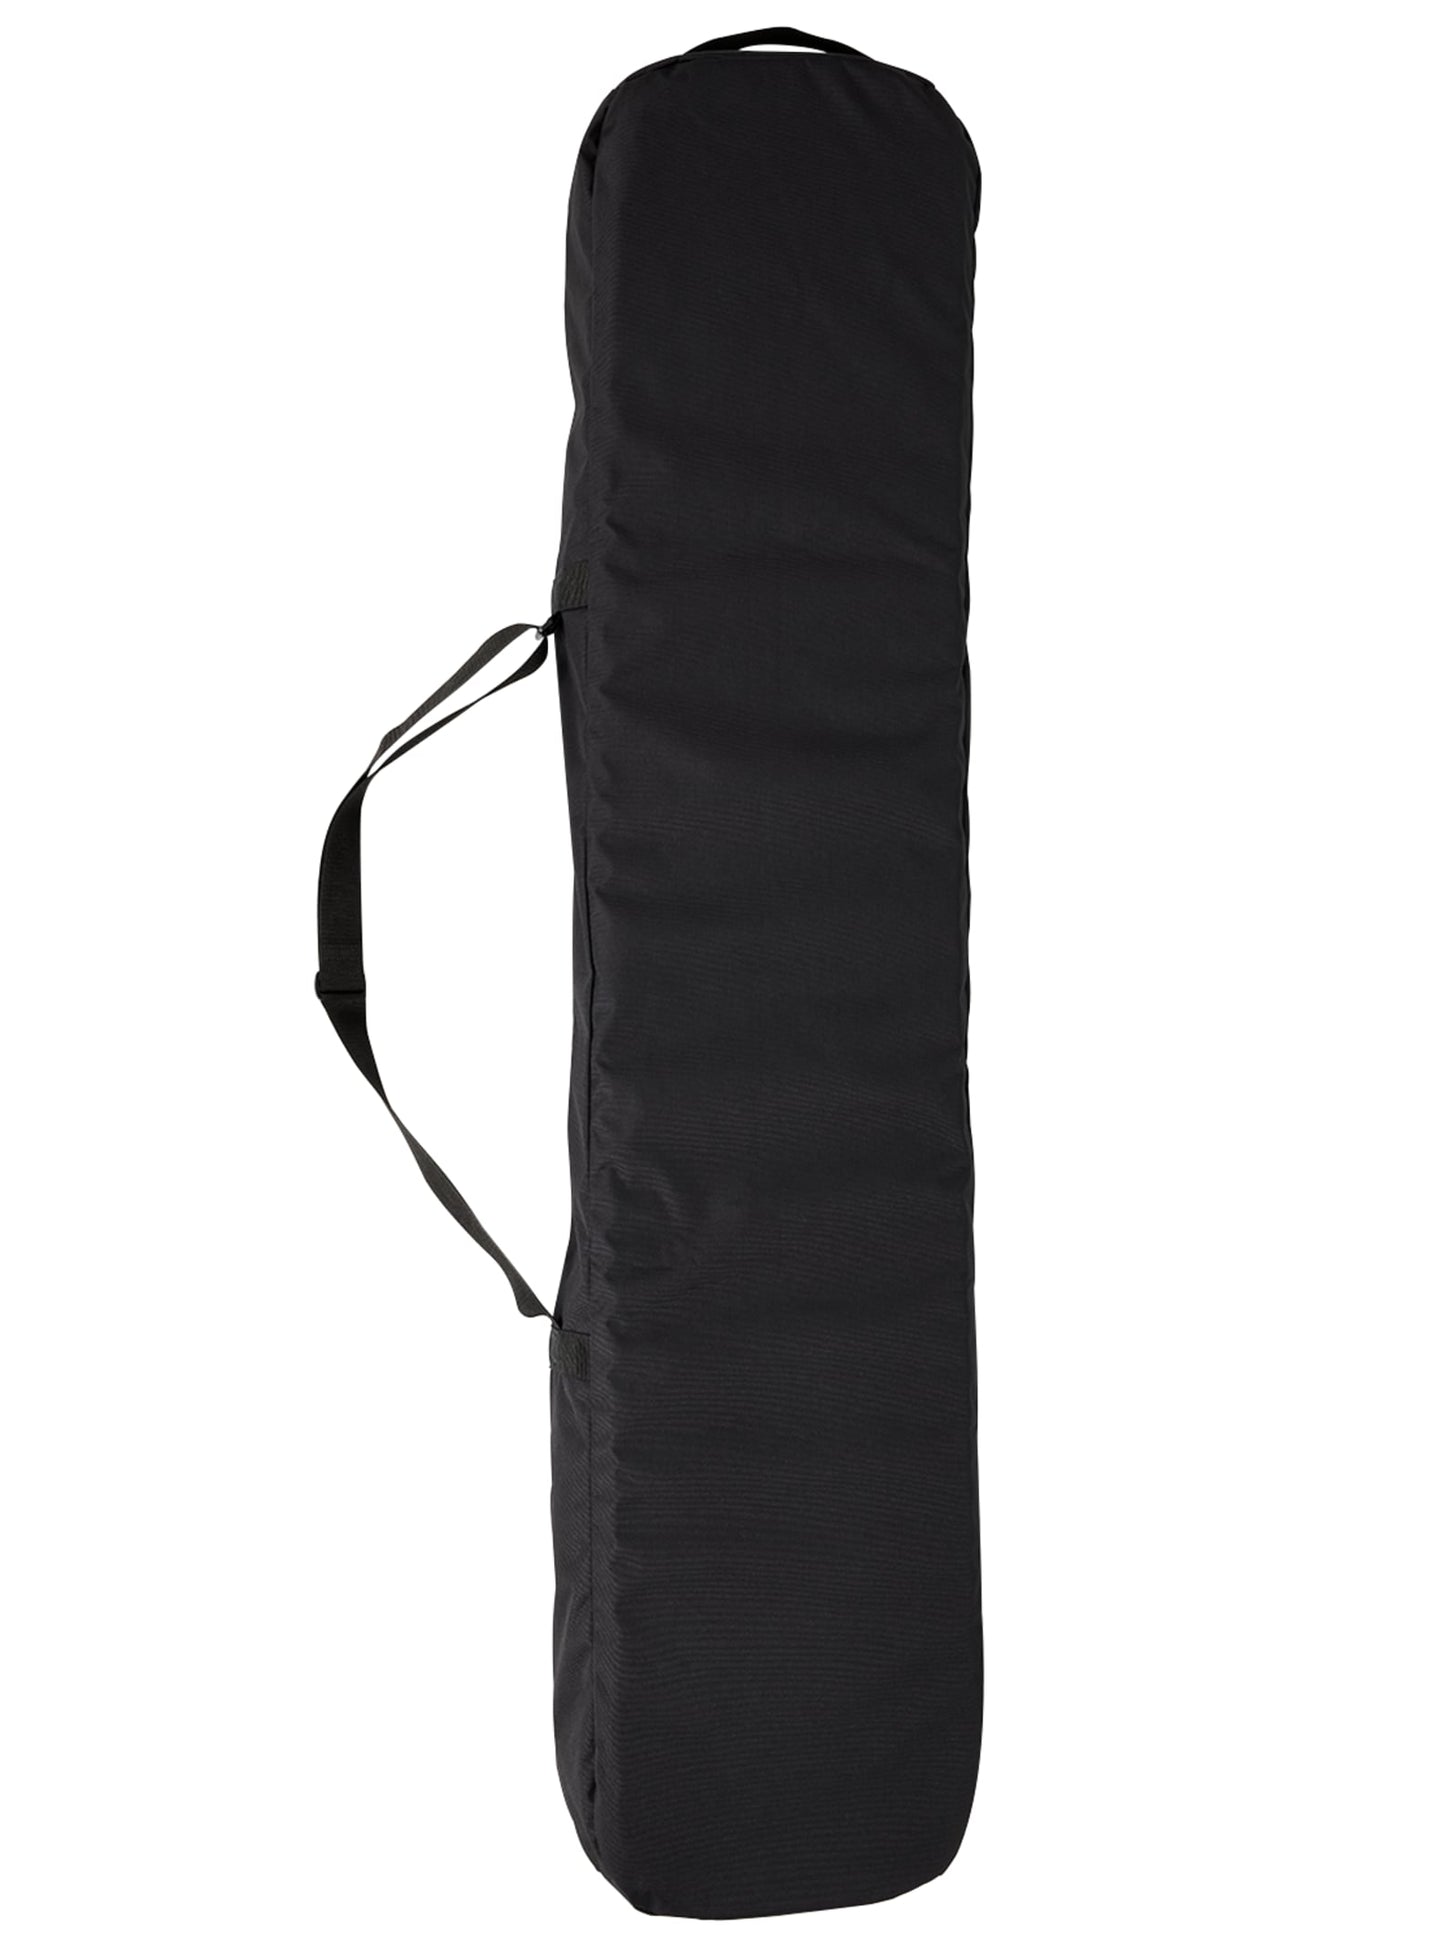 Burton | Burton Space Sack Board Bag True Black  | Accesorios nieve, Funda tablas, Snowboard, Unisex | 